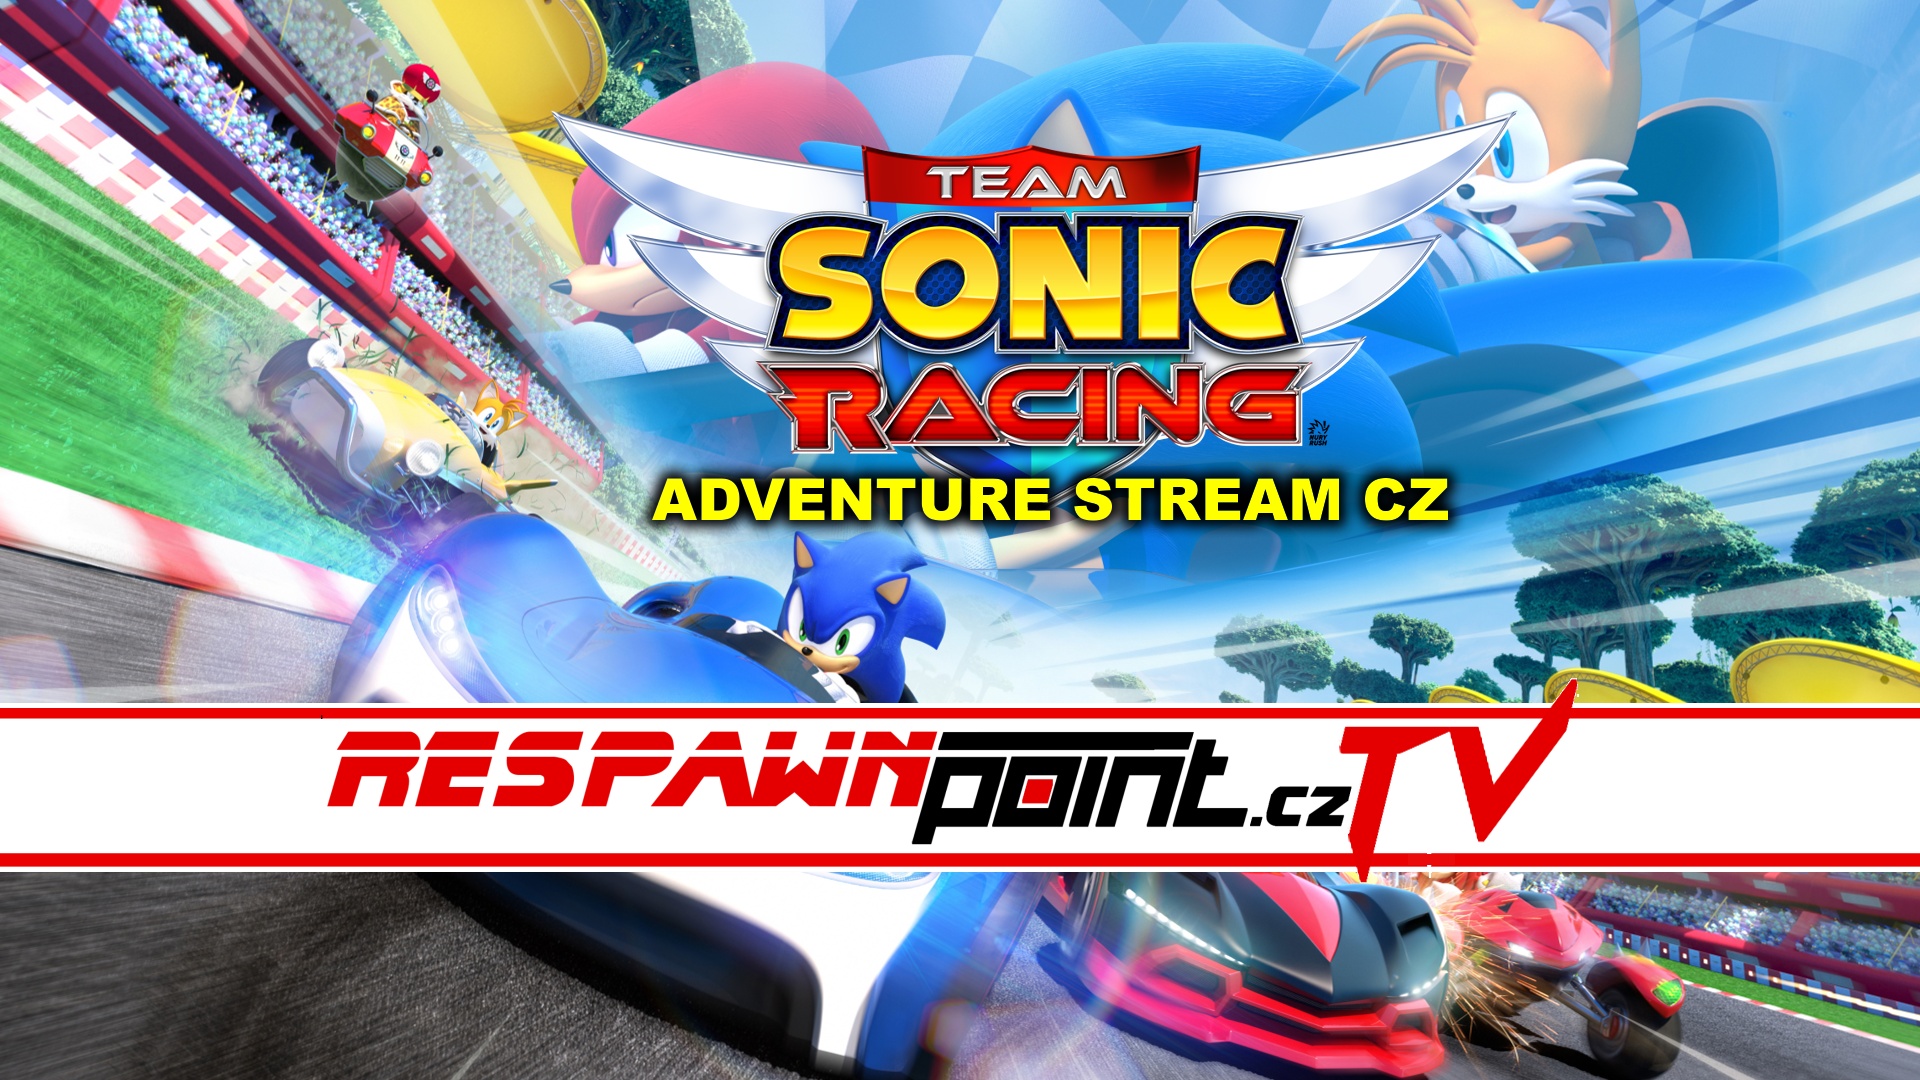 Team Sonic Racing – Adventure Stream CZ